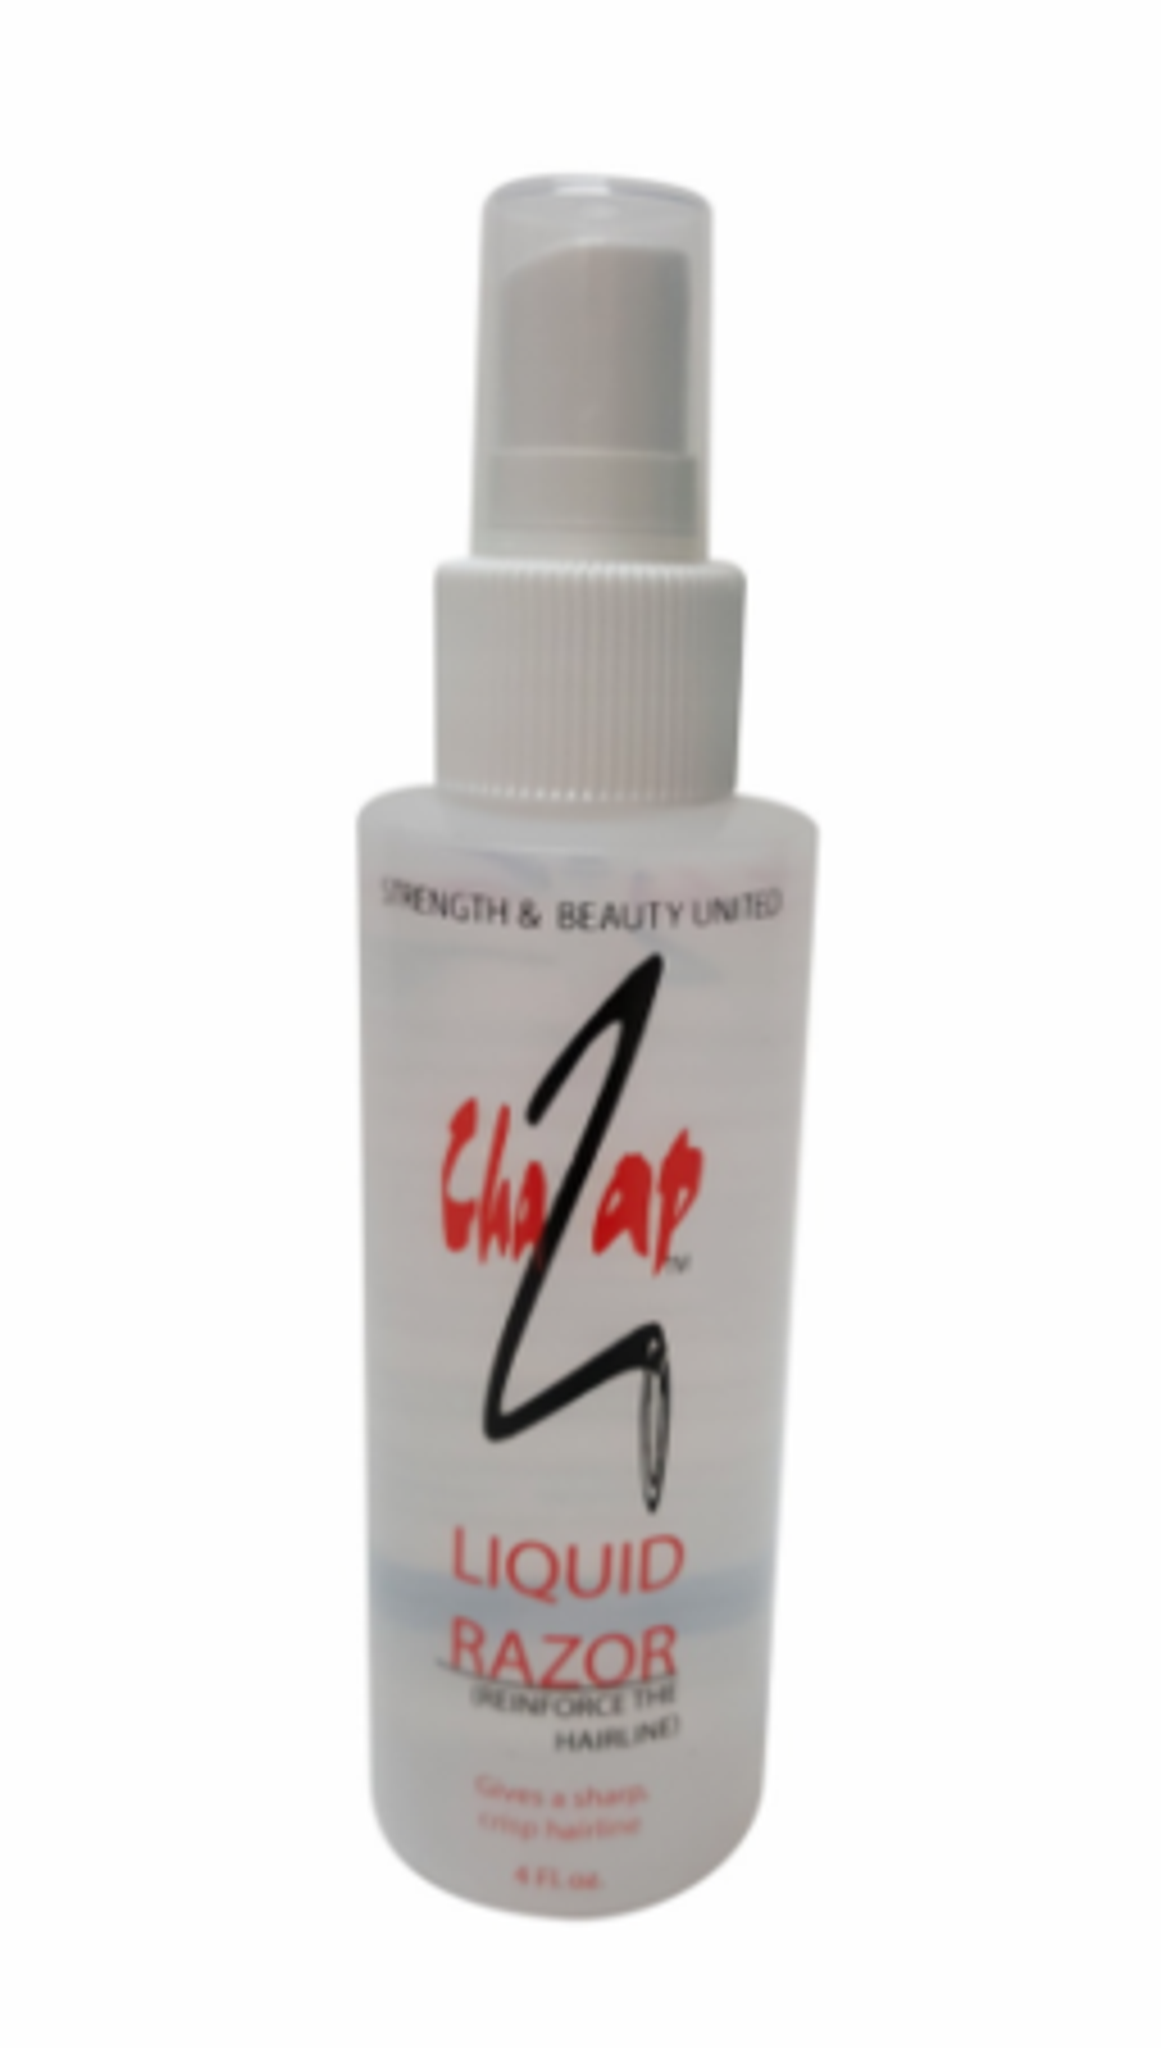 ChaZap Liquid Razor Spray